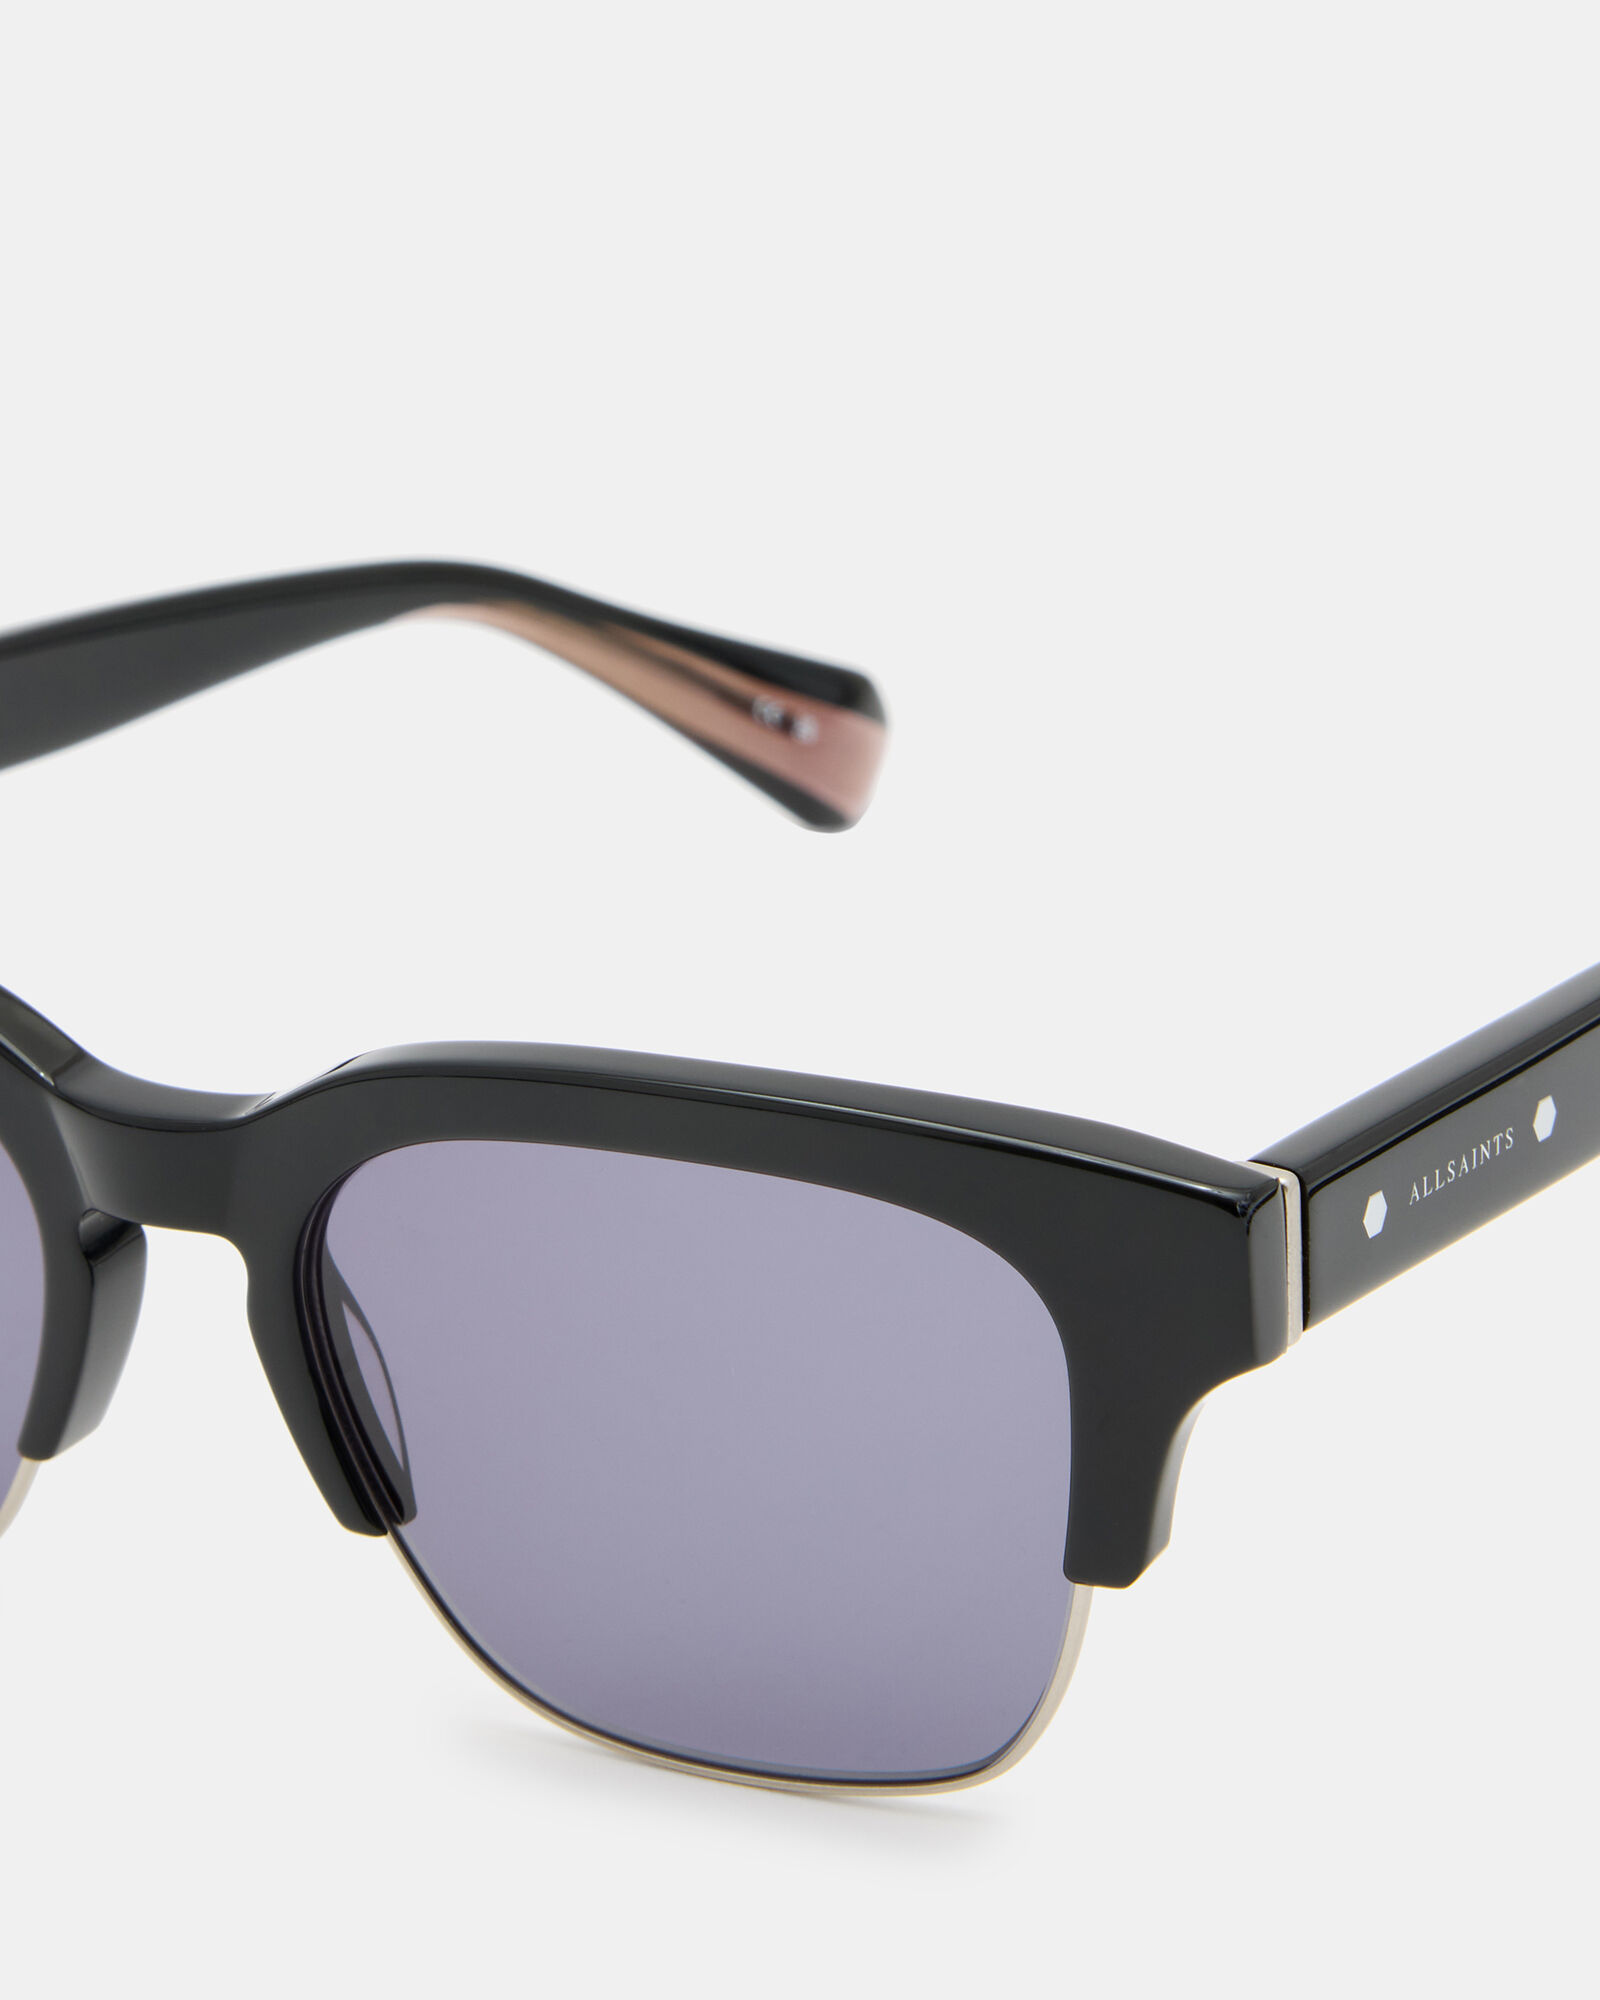 Buy Being Retro Square Sunglasses | UV Protection Sunglasses | Light  Weight, Matt Finished, Premium Looks (For Men & Women) (Black) at Amazon.in